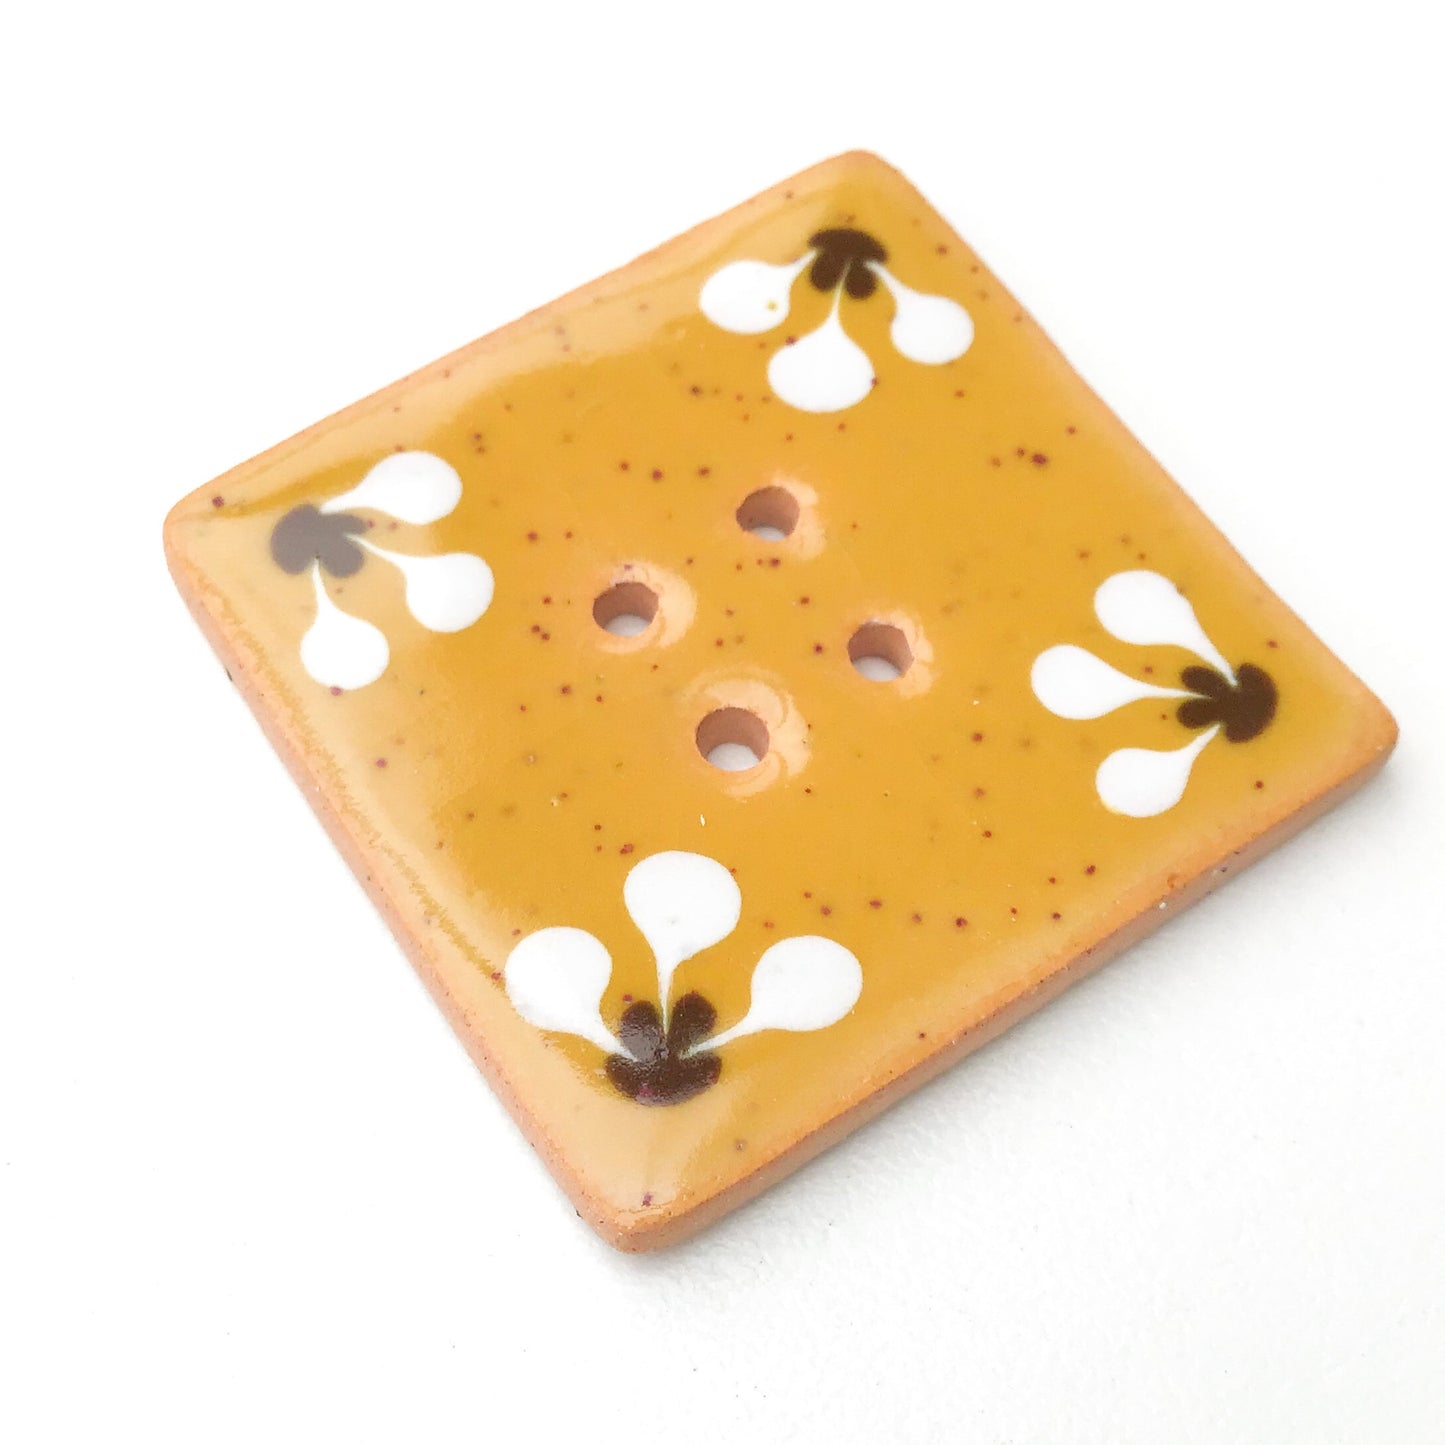 Large Square Decorative Button - Speckled Mustard - Brown - White - Art Button - 1 7/16"